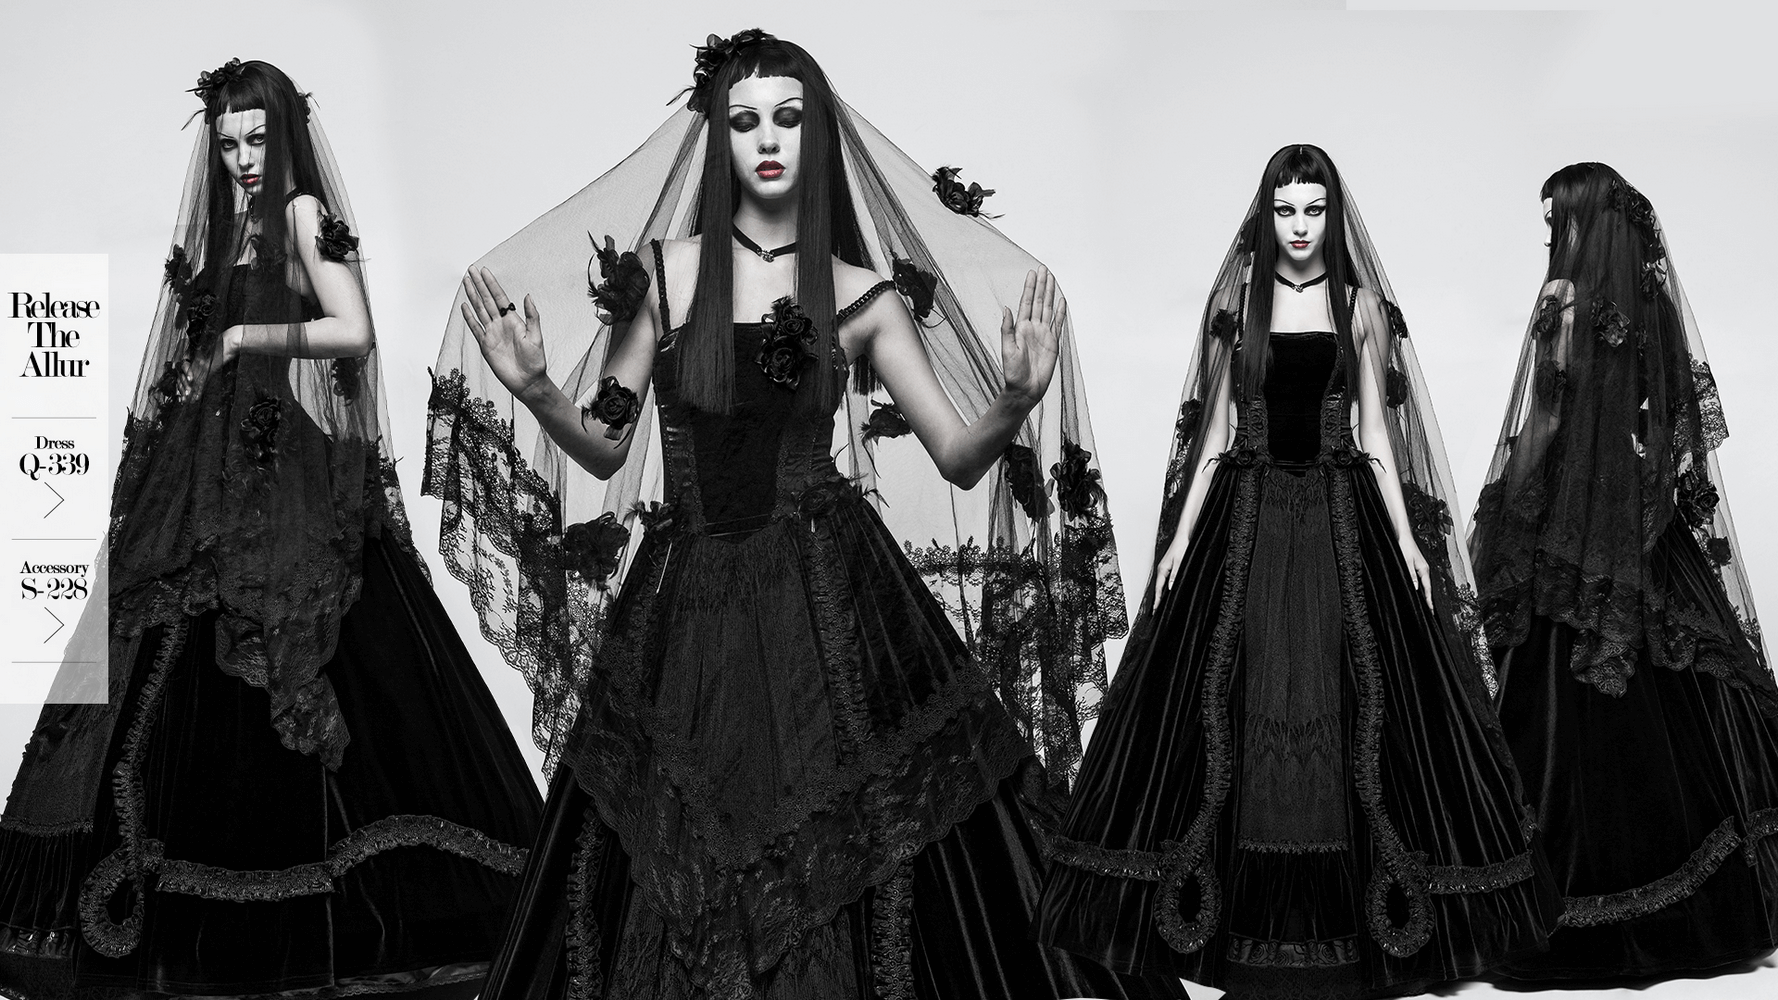 Elegant Black Lace Wedding Veil with 3D Roses